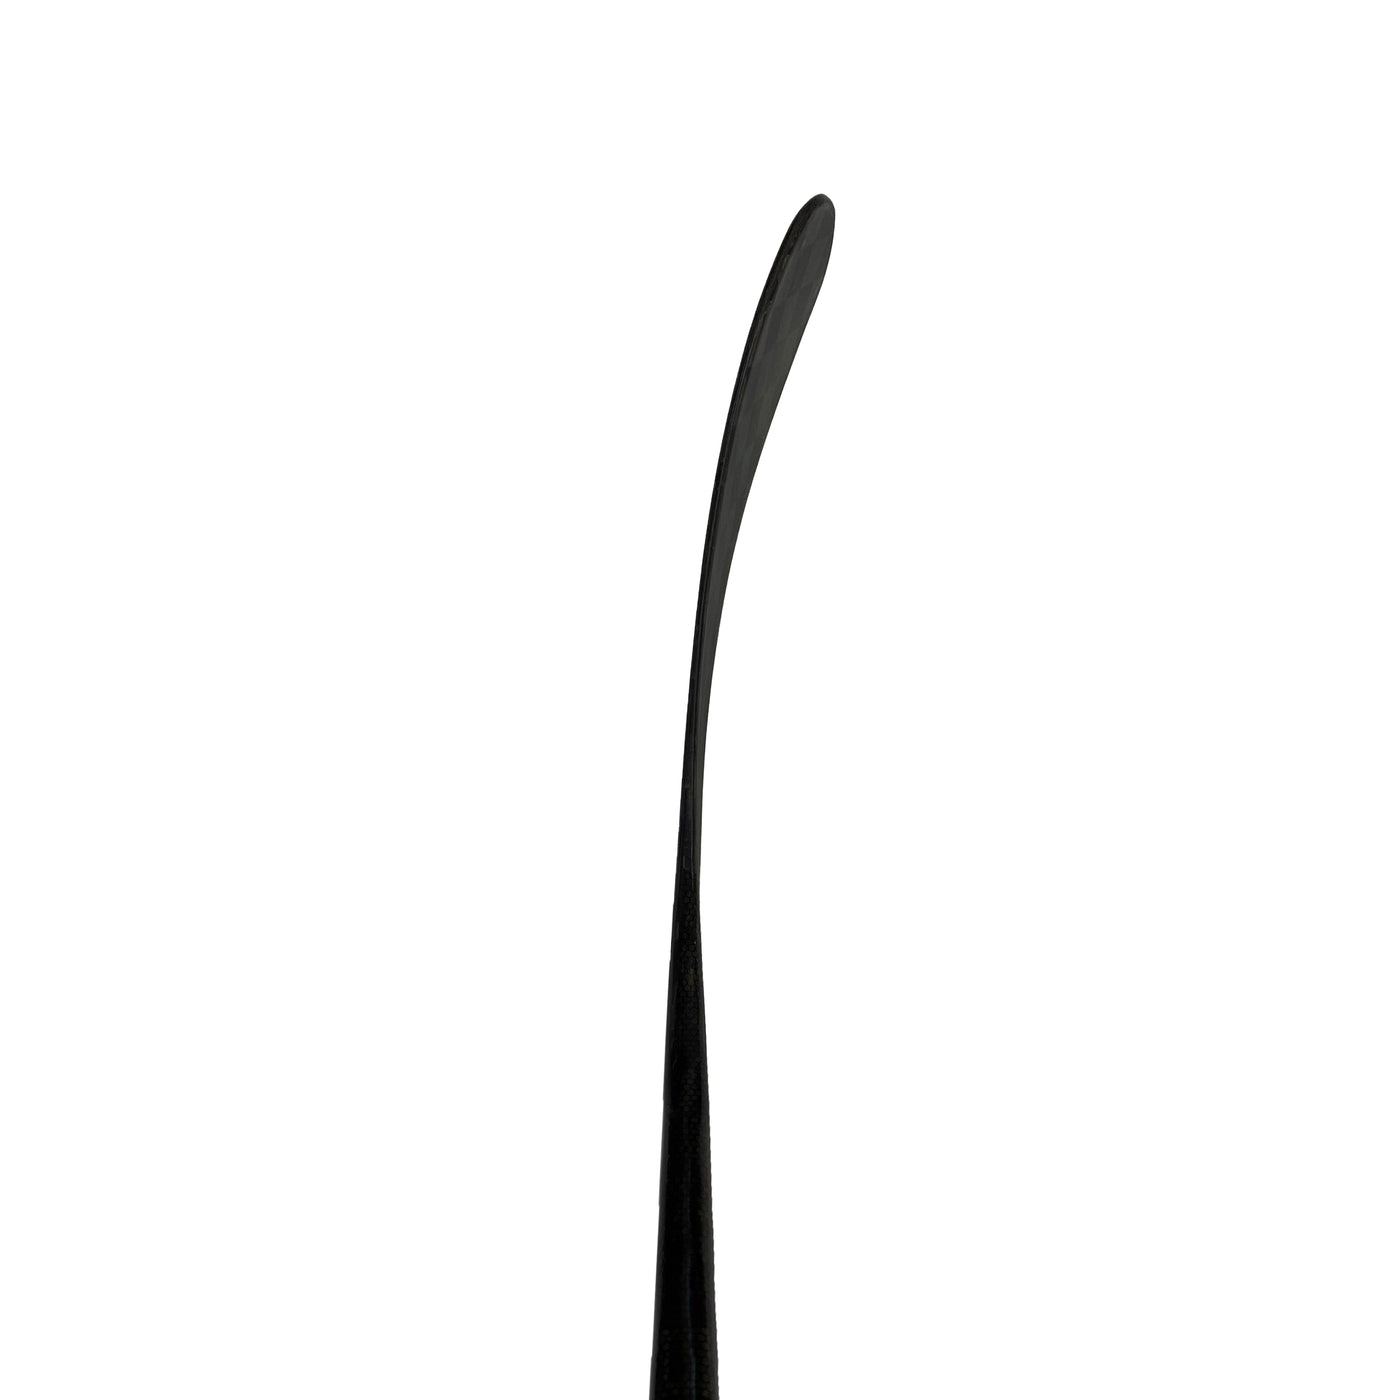 True Catalyst 9X - Pro Stock Hockey Stick - DYLAN LARKIN